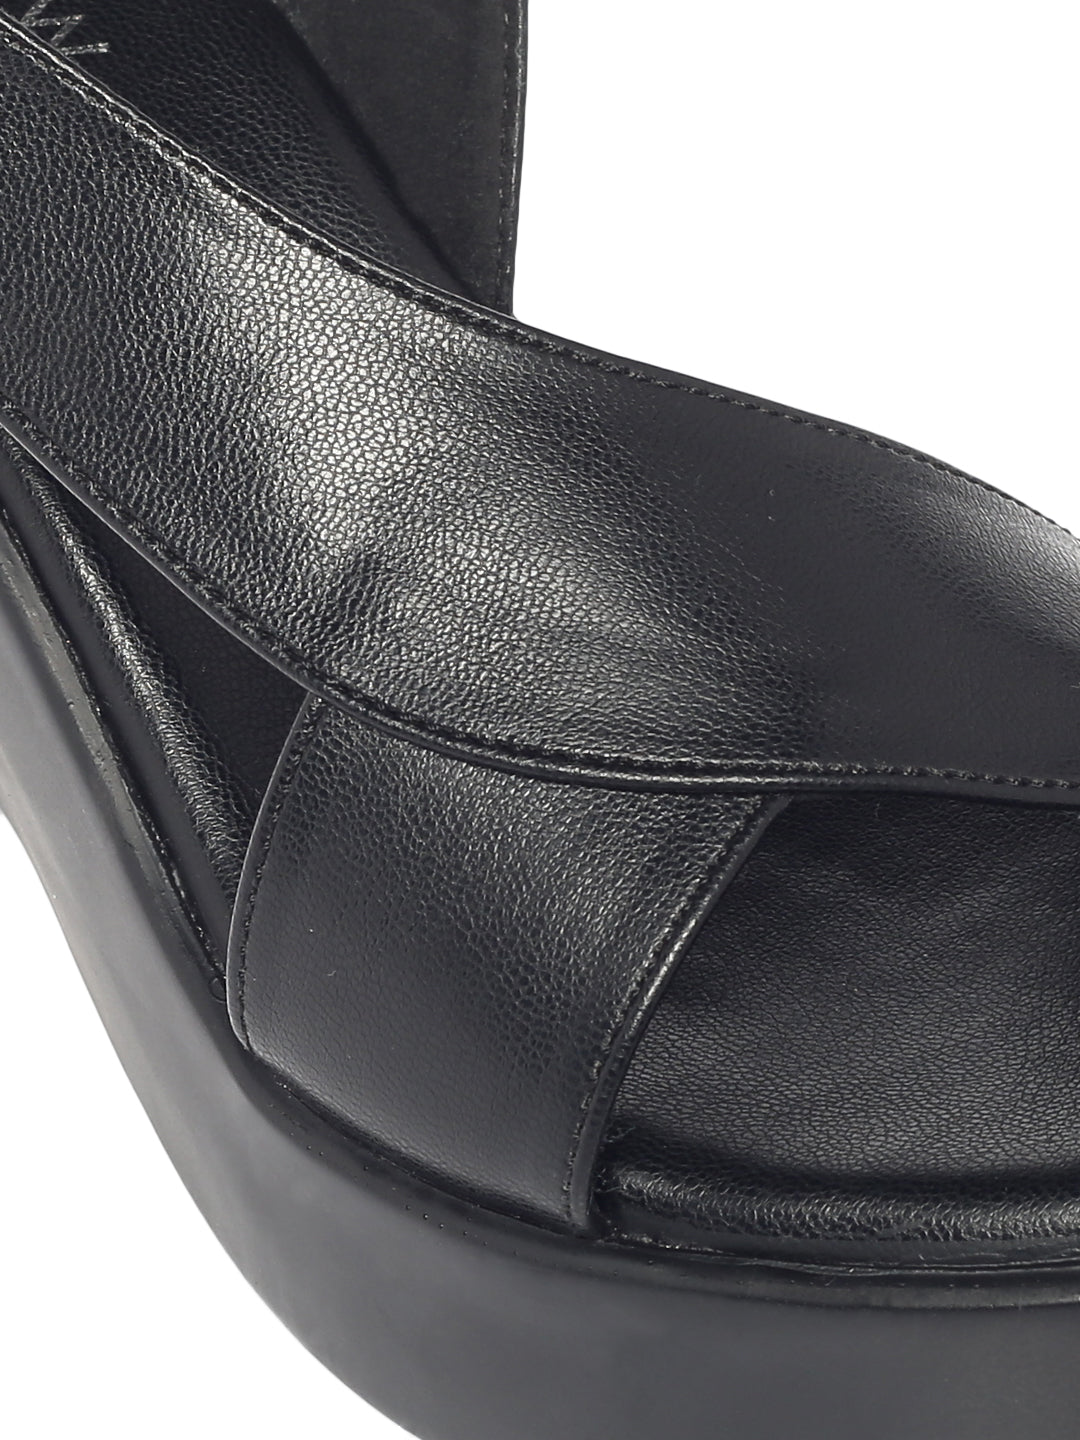 Samaira Black Wedge Heels